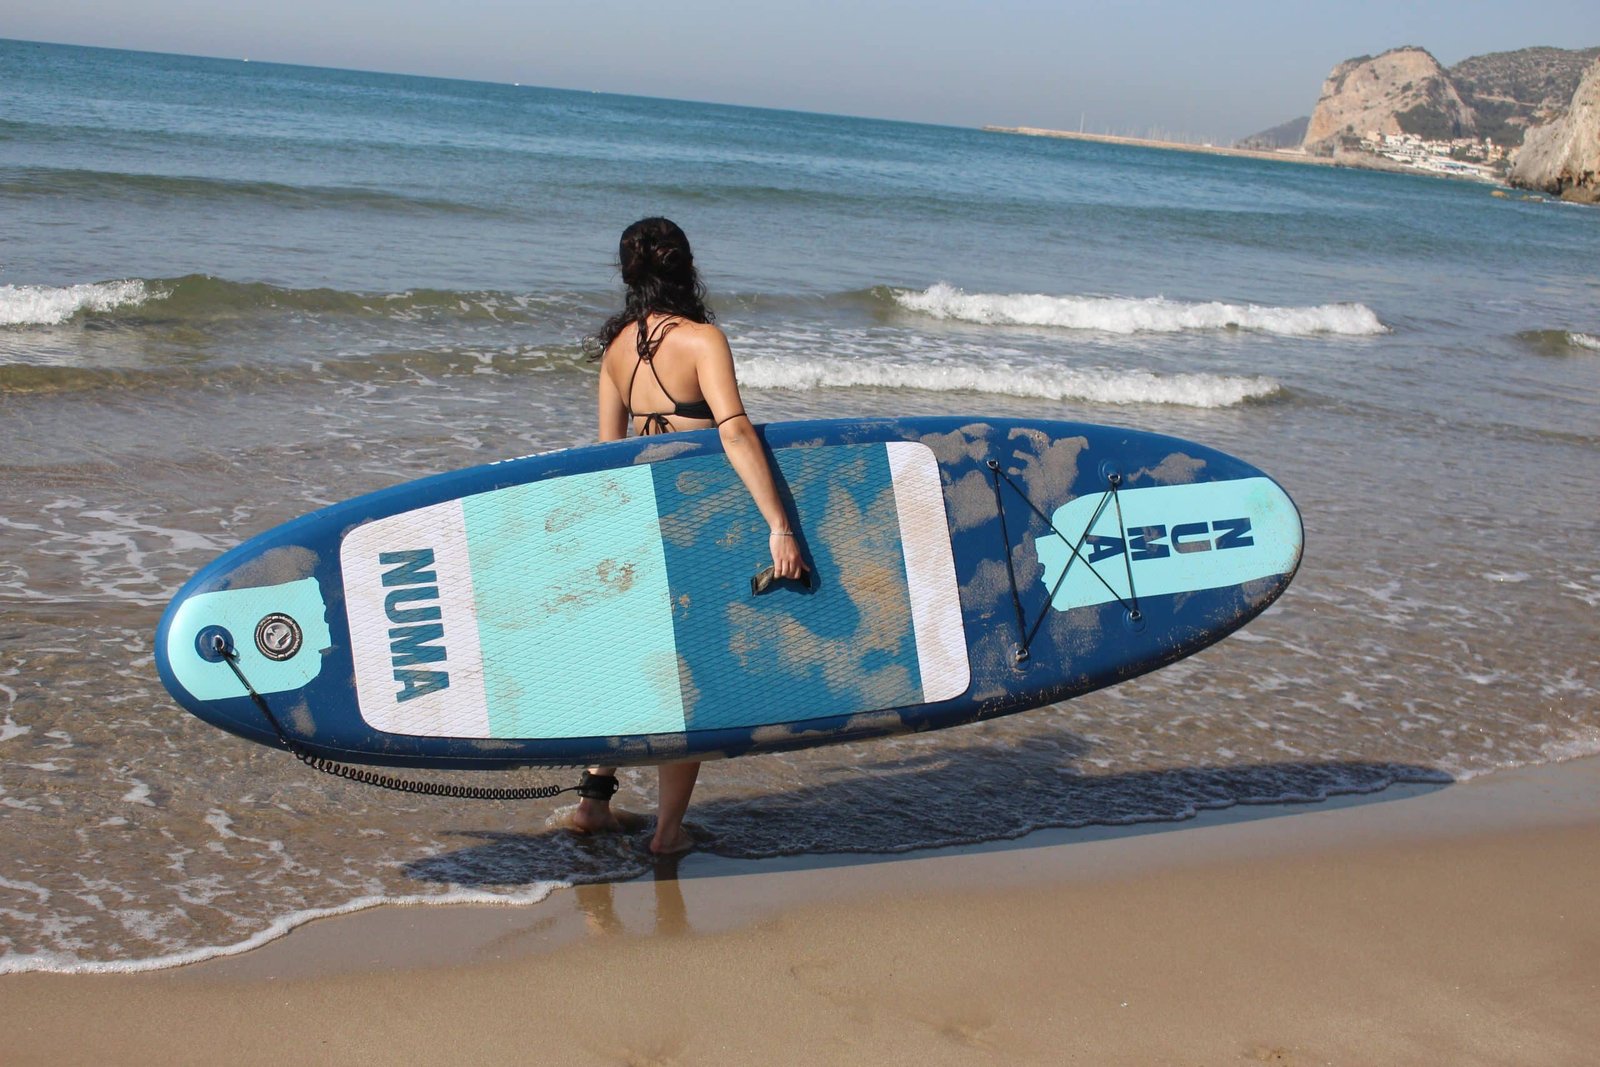 Tabla paddle surf hinchable (<130 kg) 1 o 2 personas 10' Itiwit azul